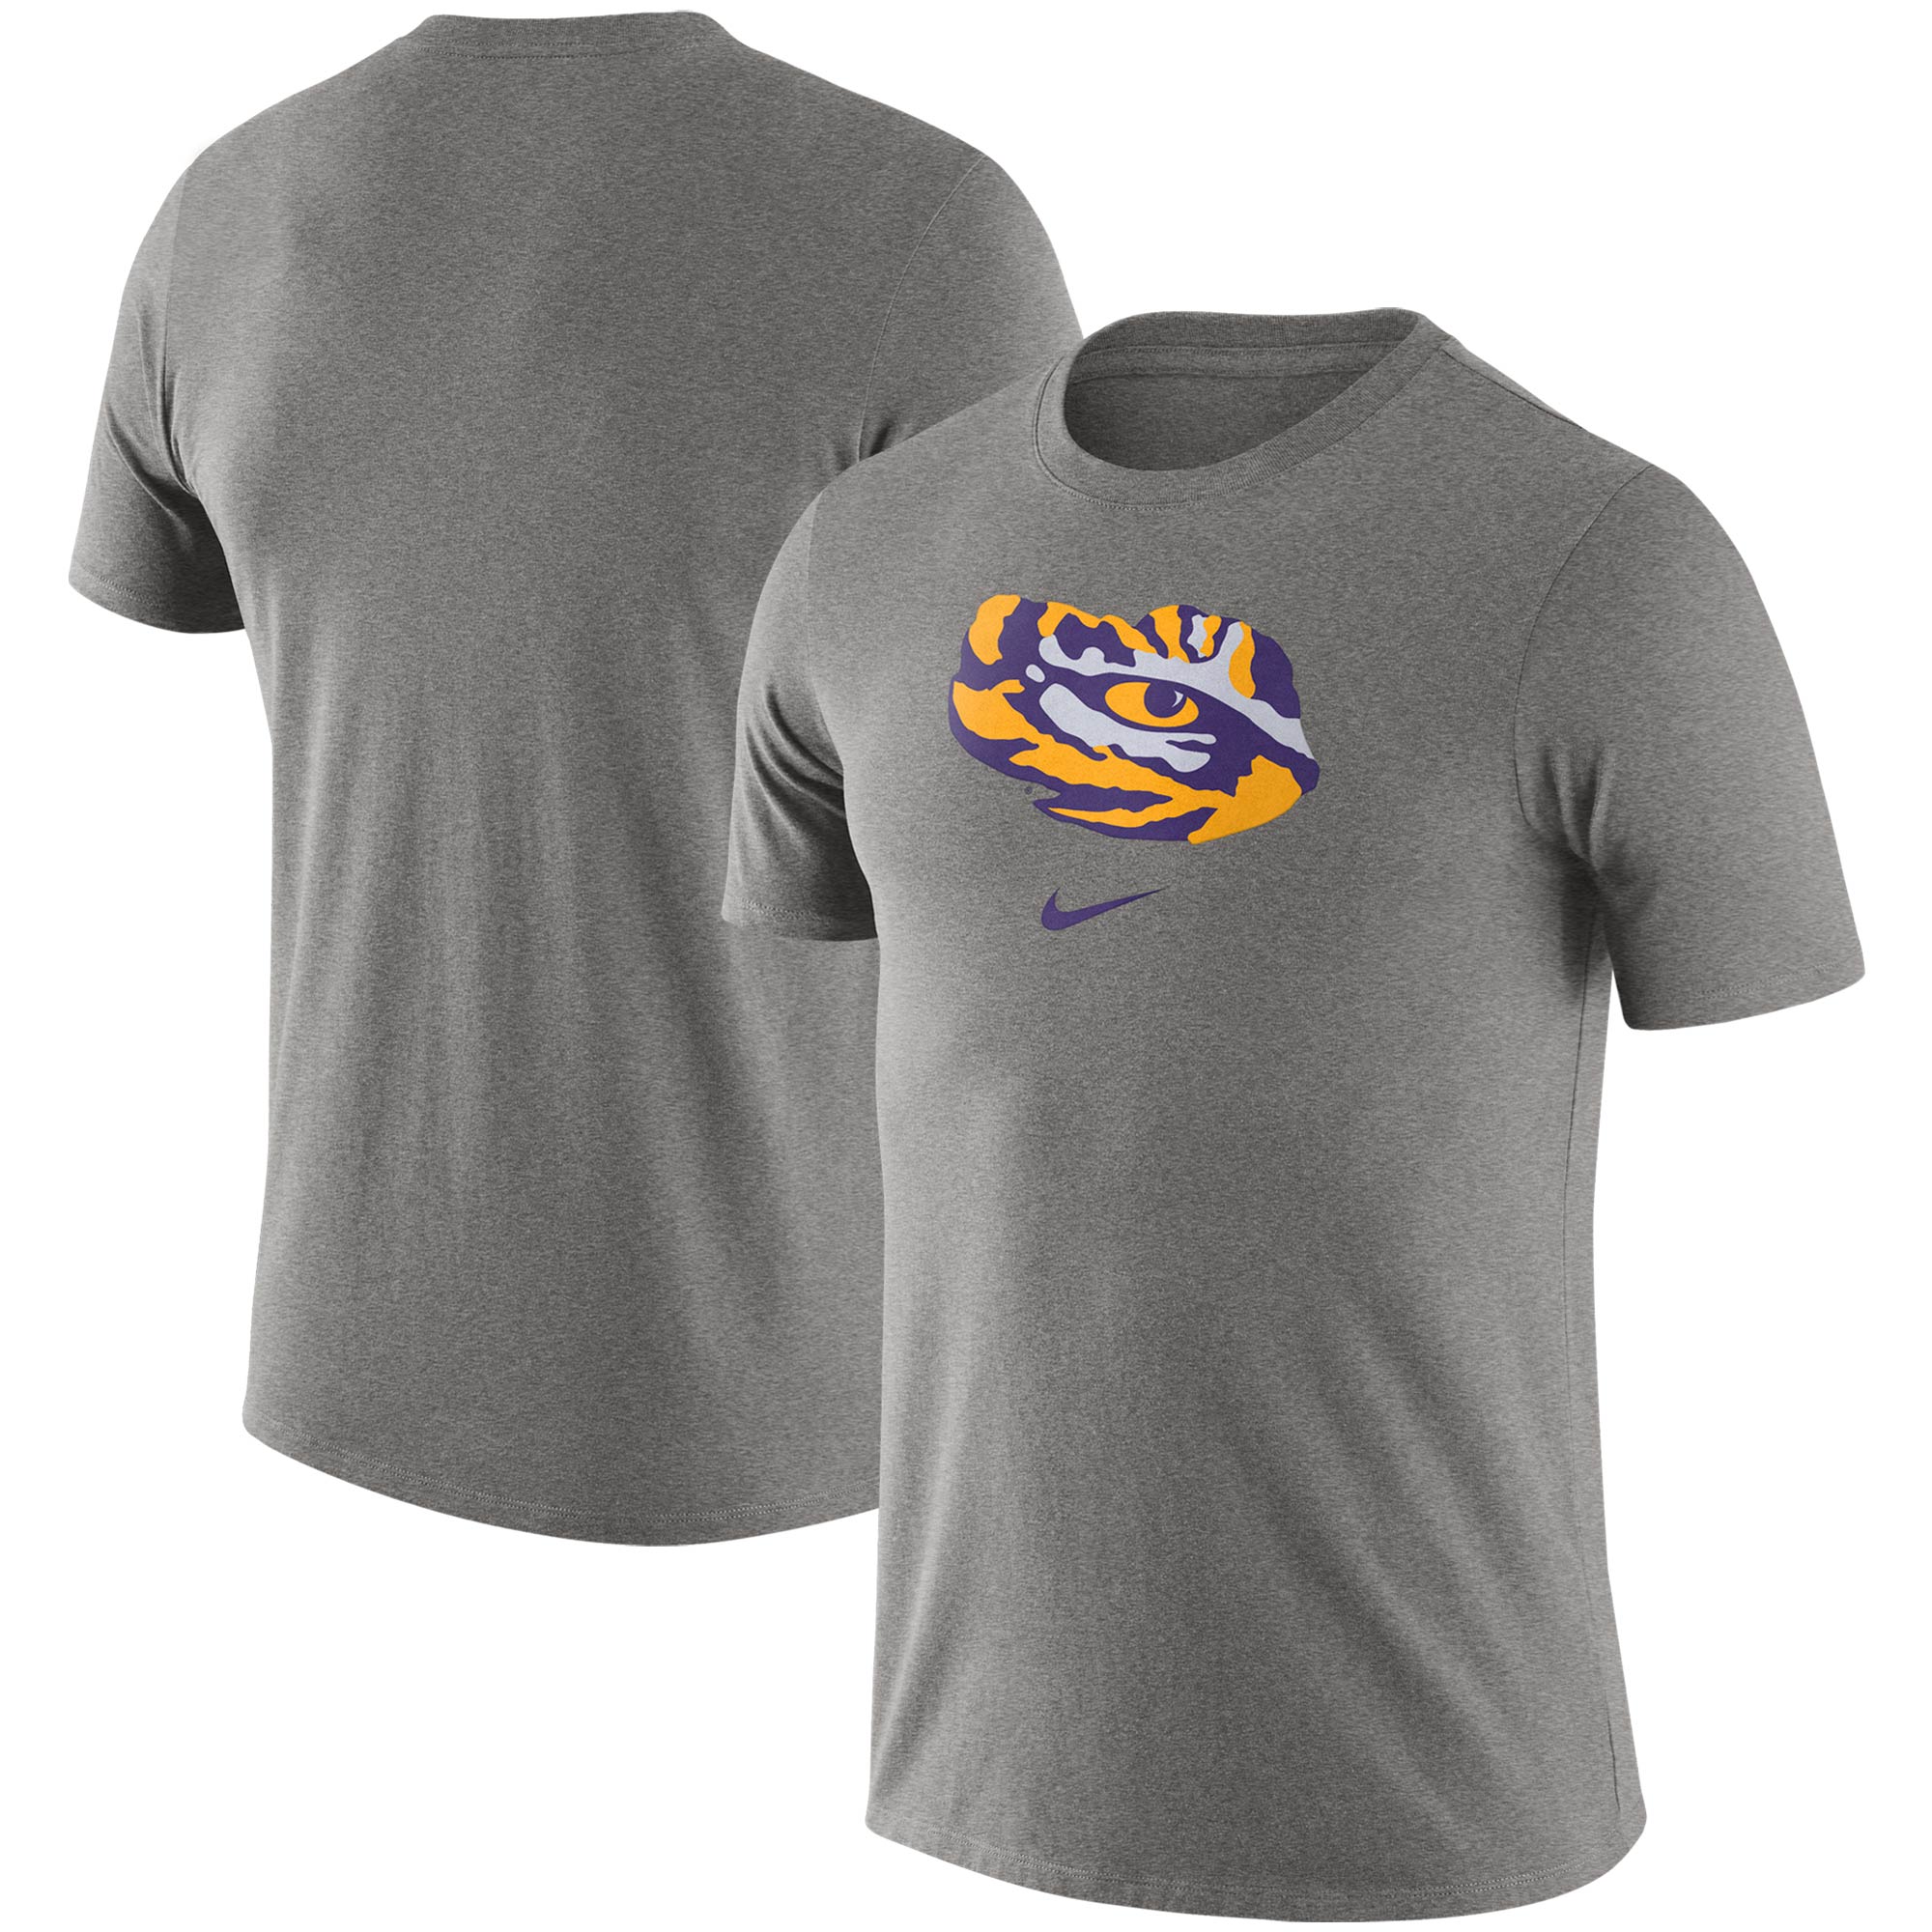 Nike LSU Essential Logo T-Shirt - Men's